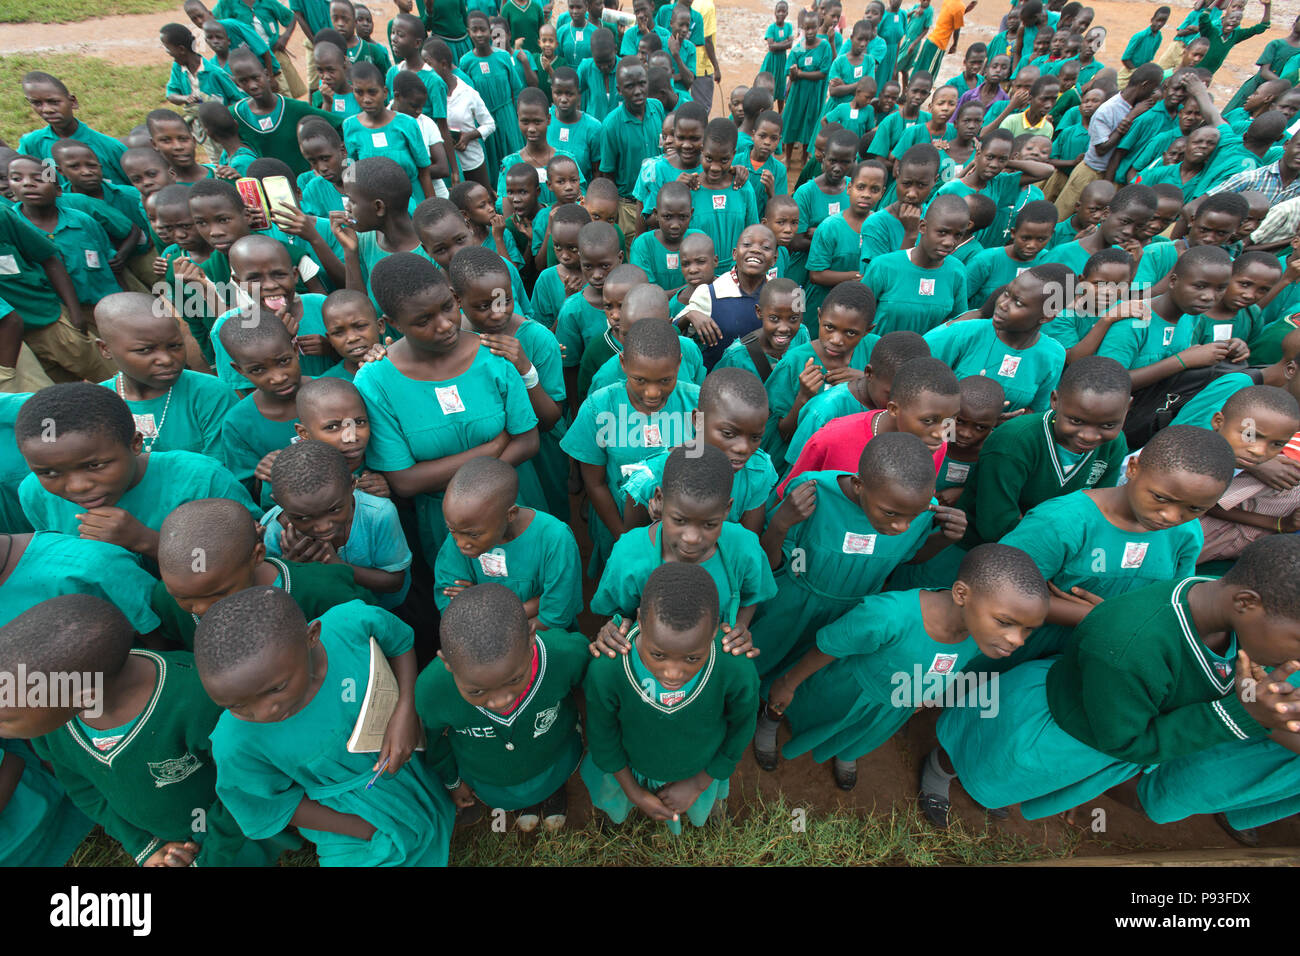 Bombo, Uganda - School appeal in the schoolyard of St. Joseph's Bombo mixed primary school. Stock Photo